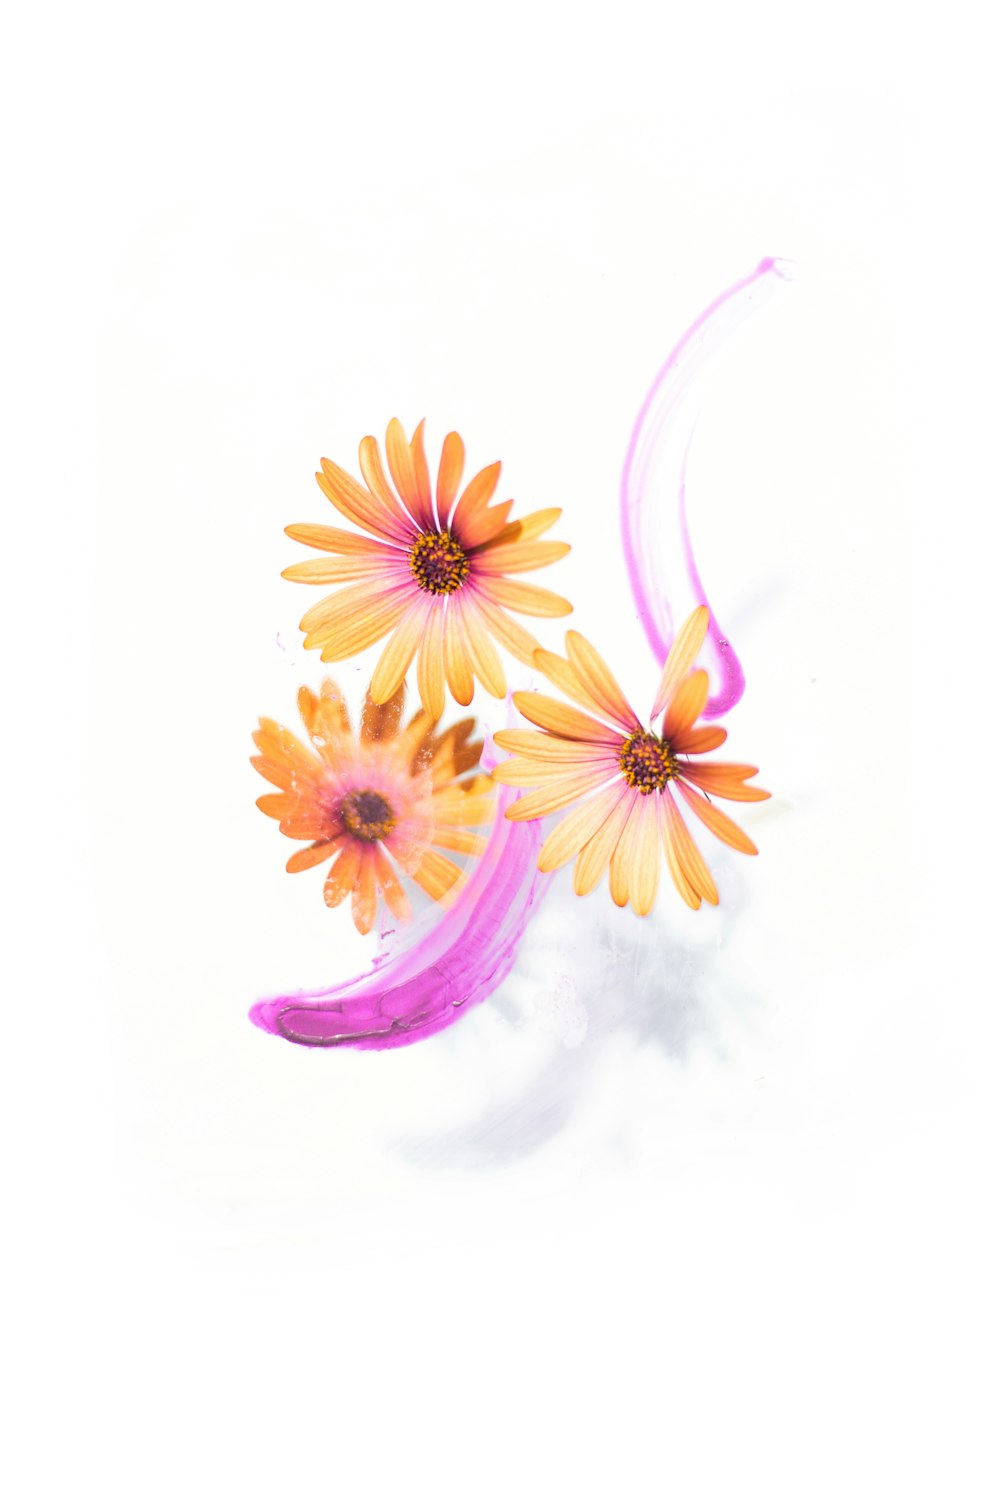 purple and yellow flower illustration